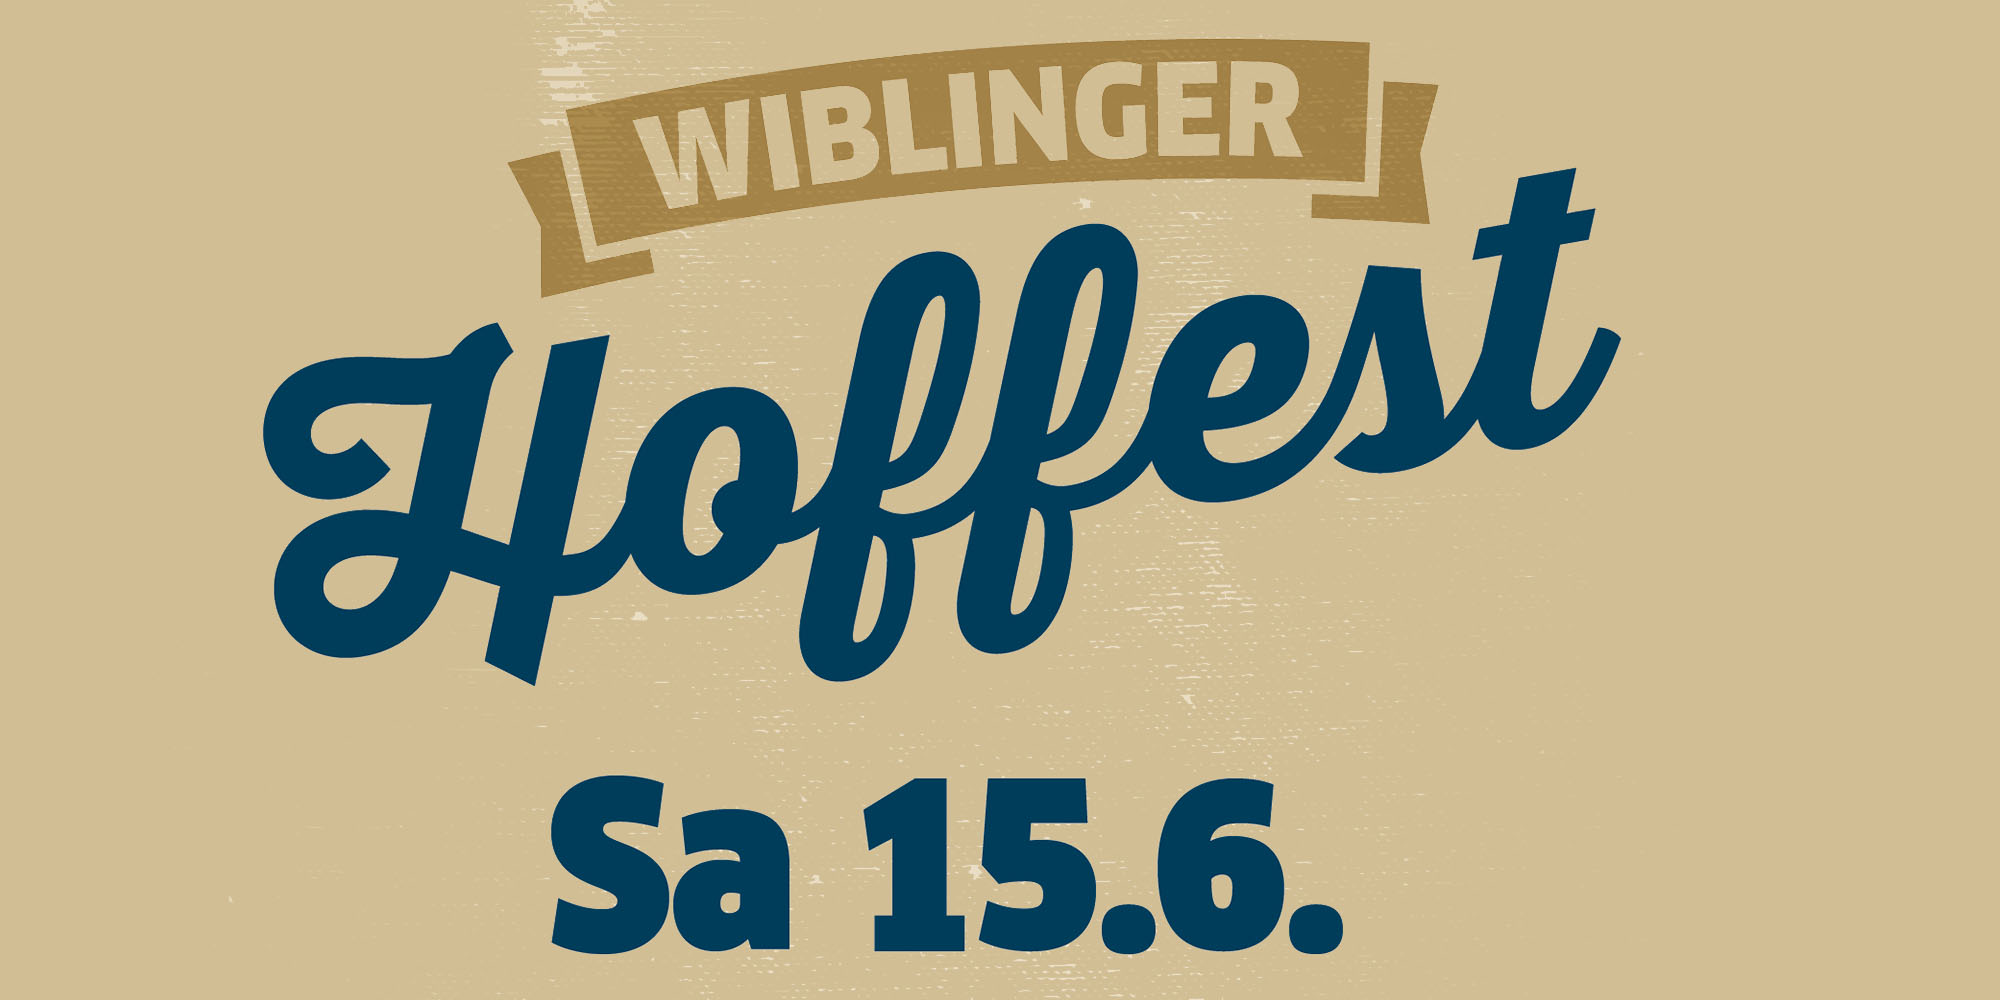 1. Wiblinger Hoffest